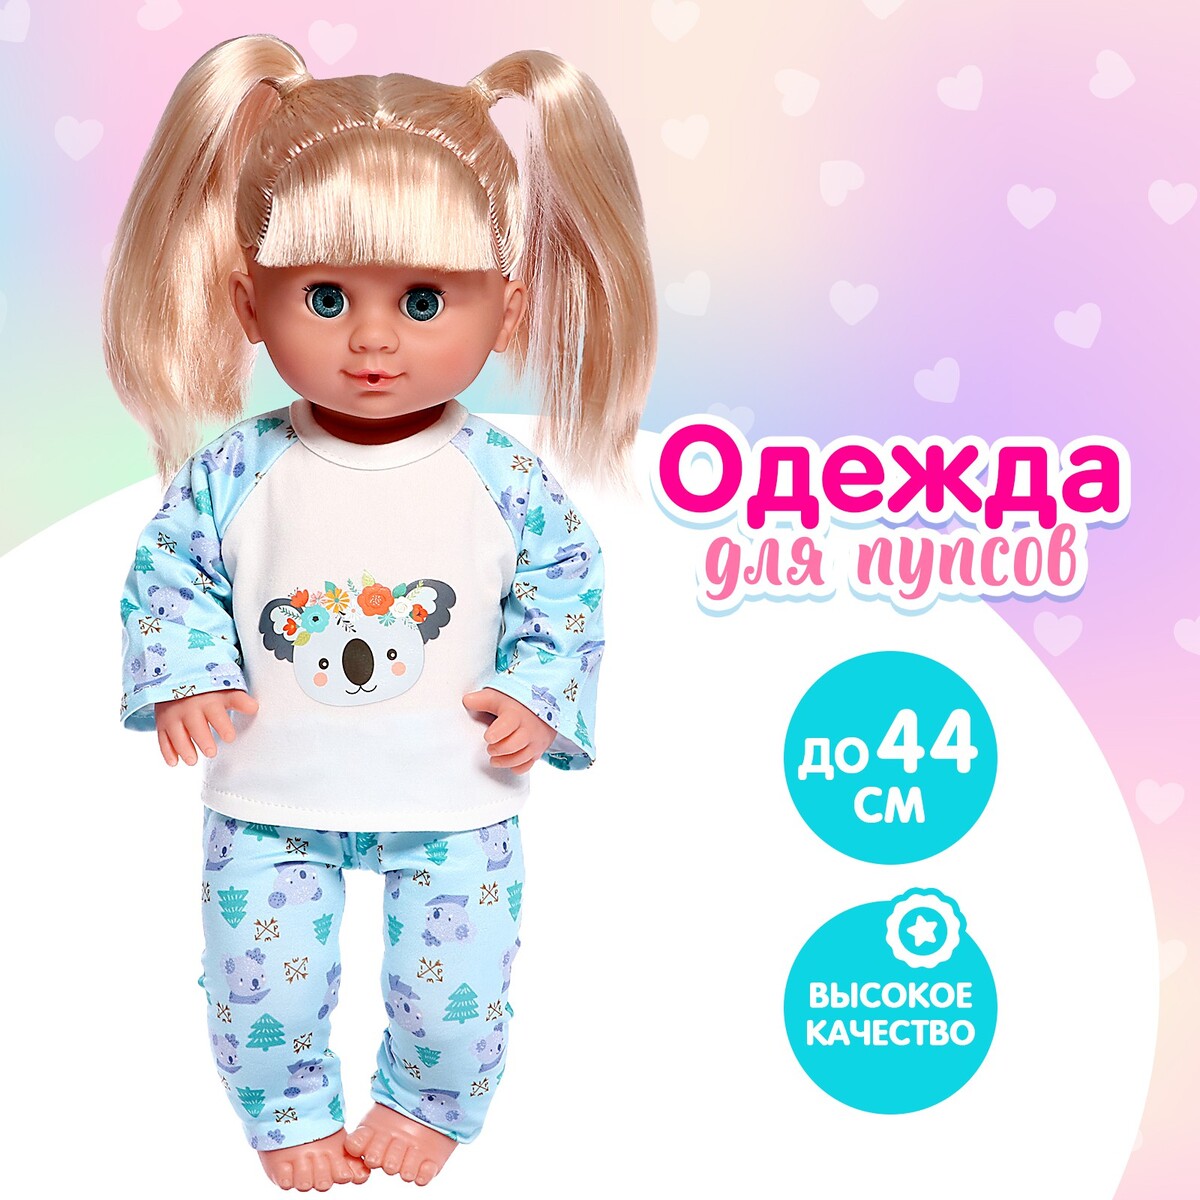 Пижама для кукол 40-44 см, 2 вещи, текстиль, на липучках